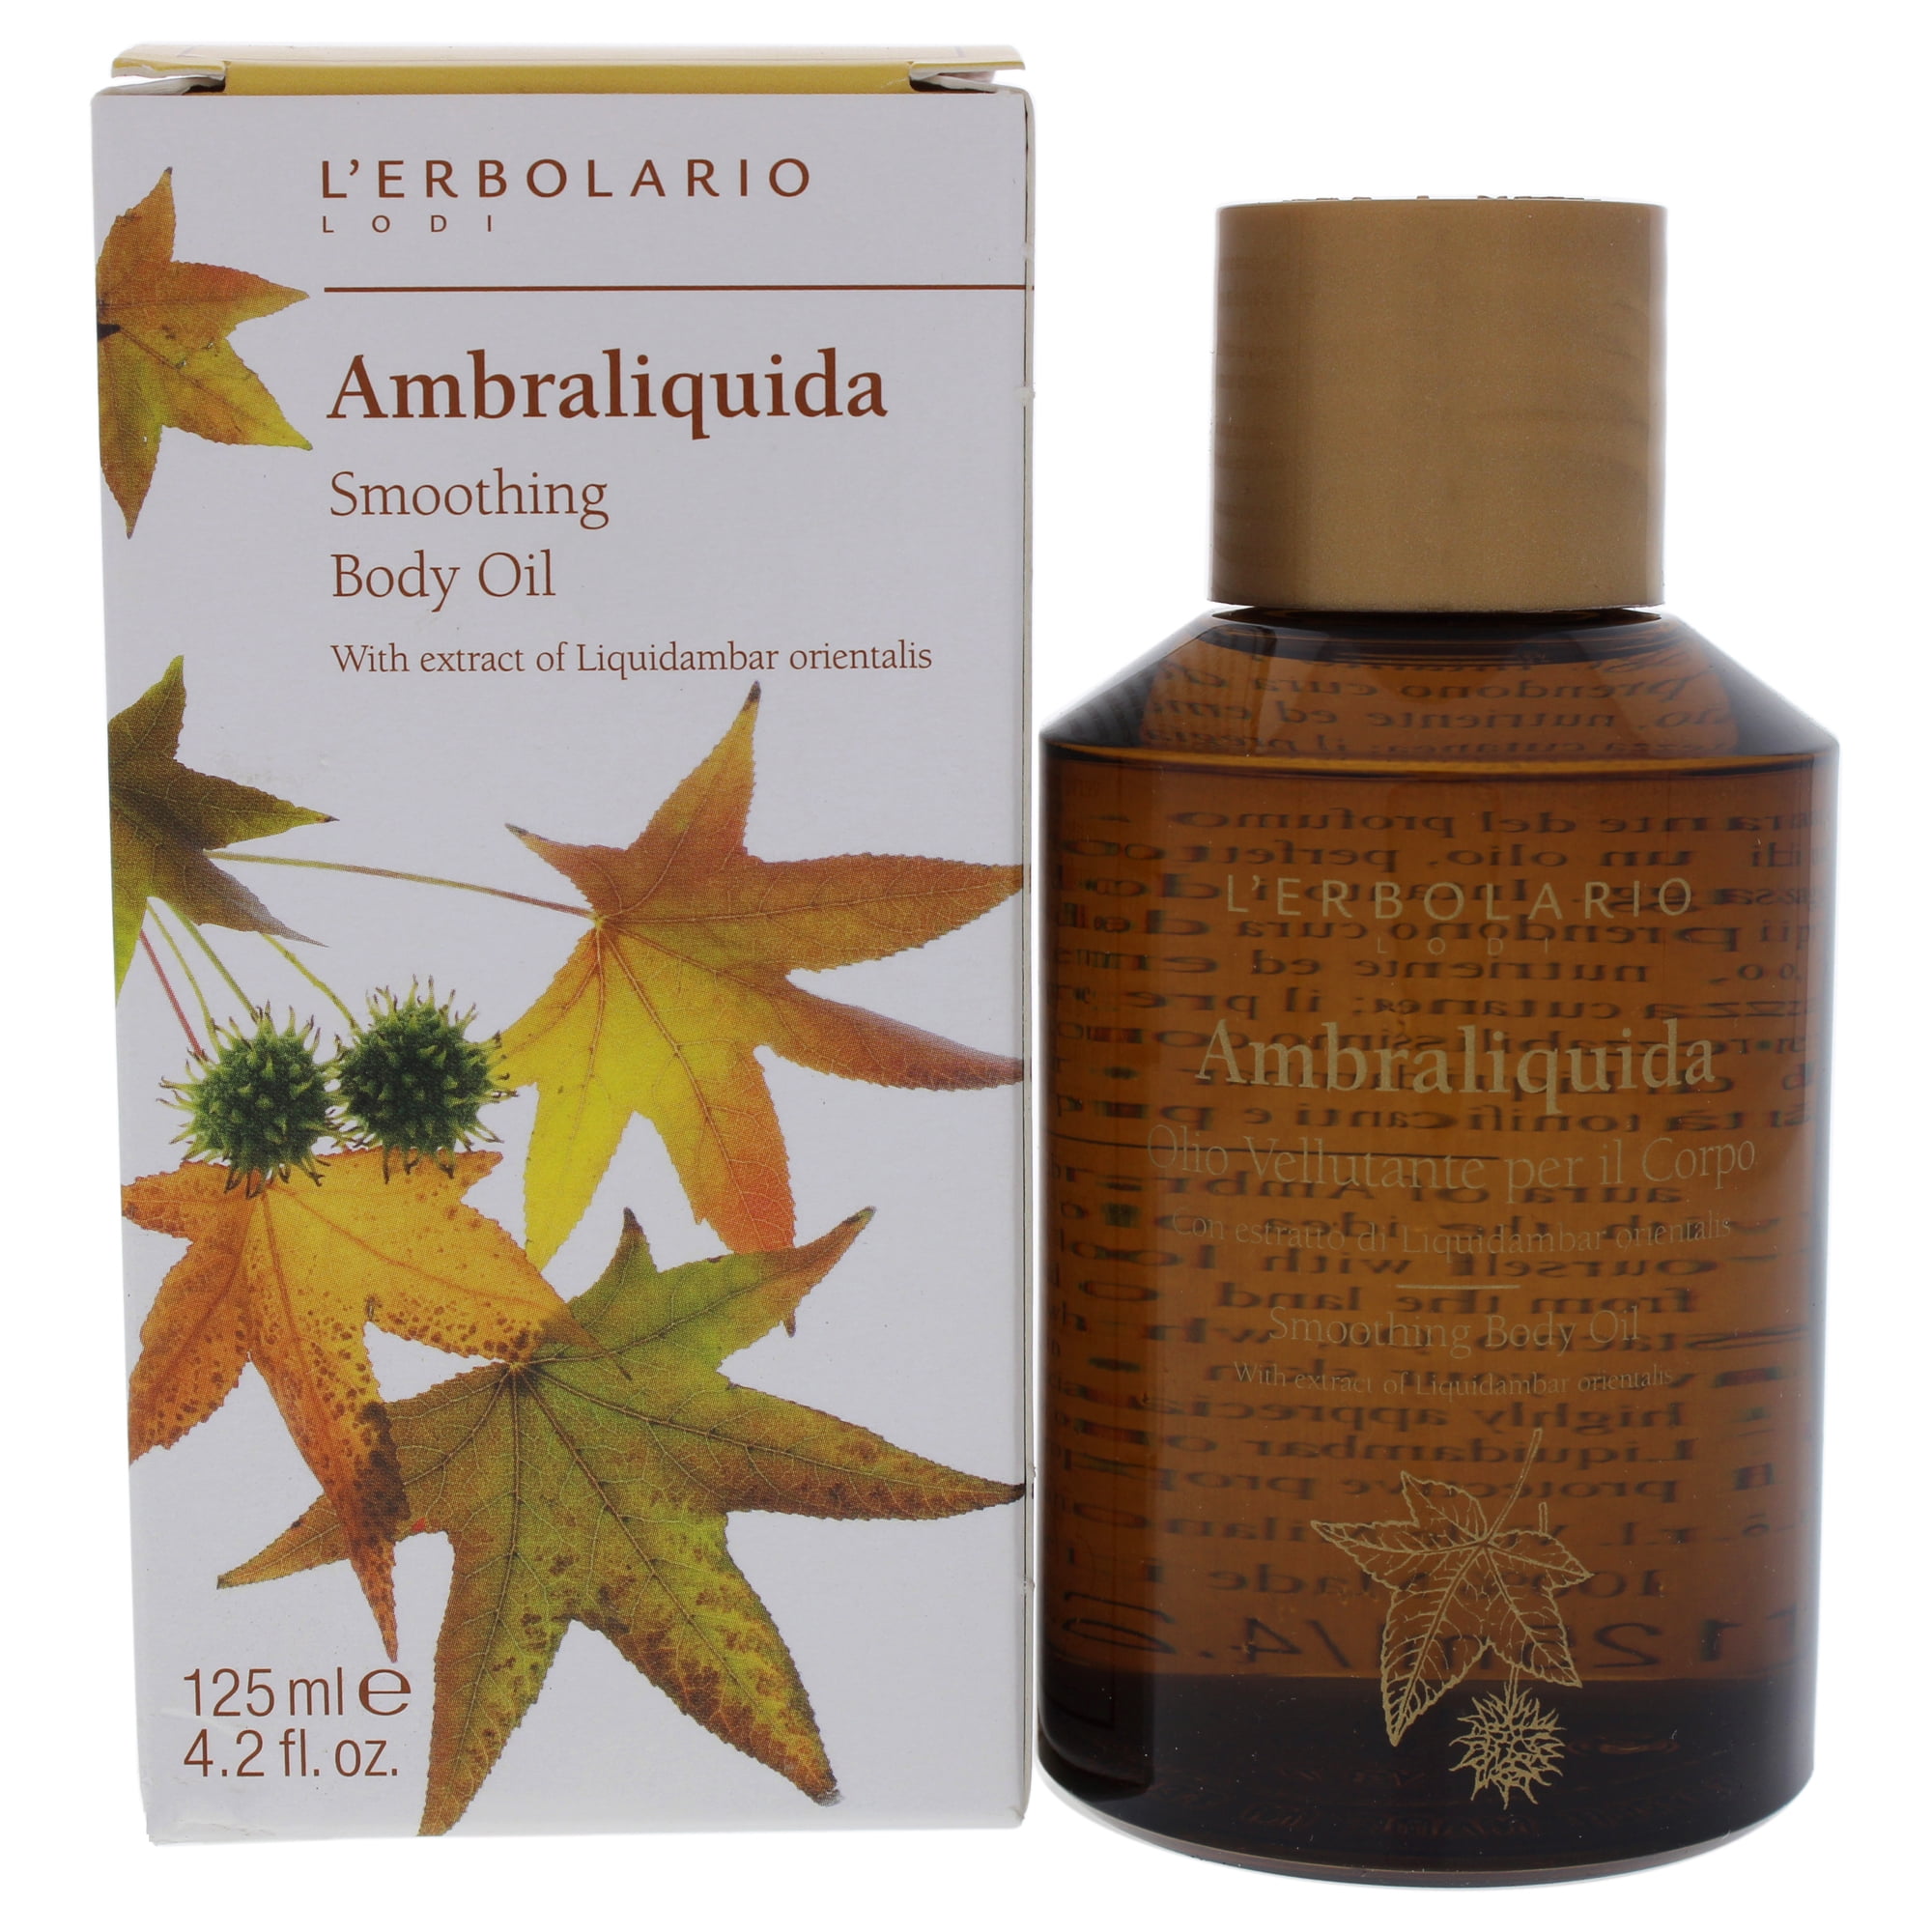 L'Erbolario Ambraliquida Smoothing Body Oil Gel, Scented Body Oil, 4.2 oz